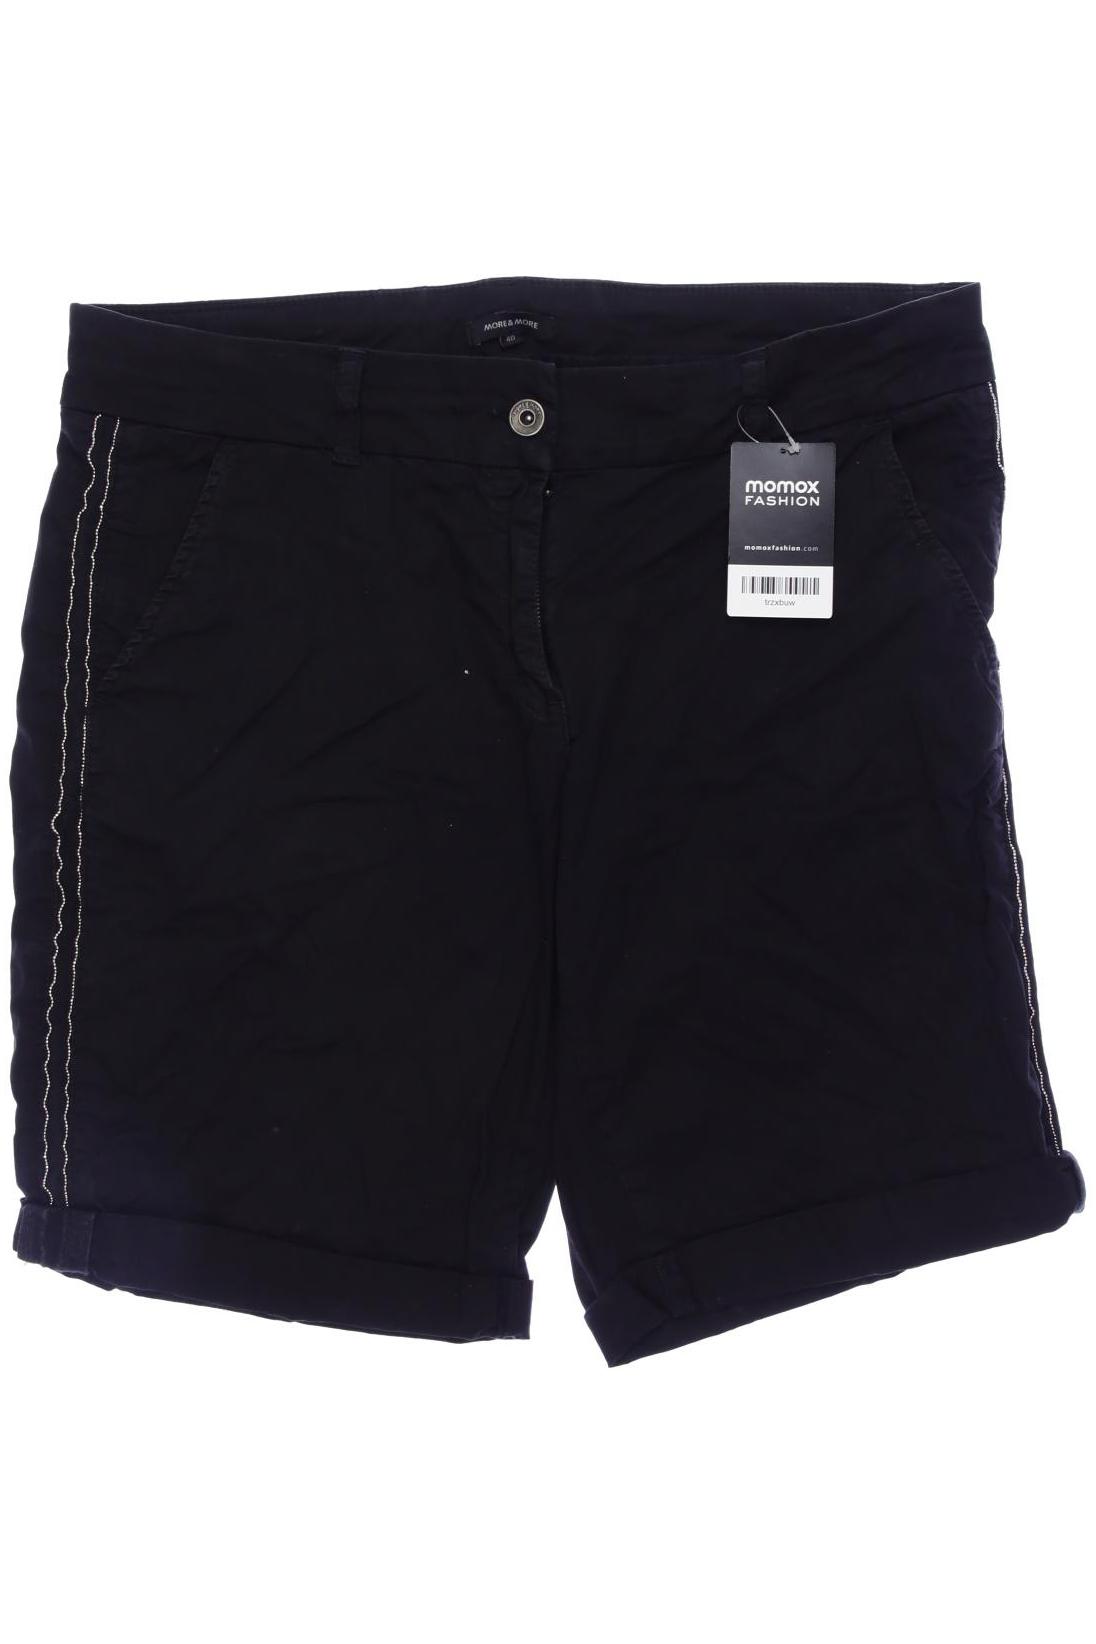 More & More Damen Shorts, schwarz, Gr. 40 von MORE & MORE